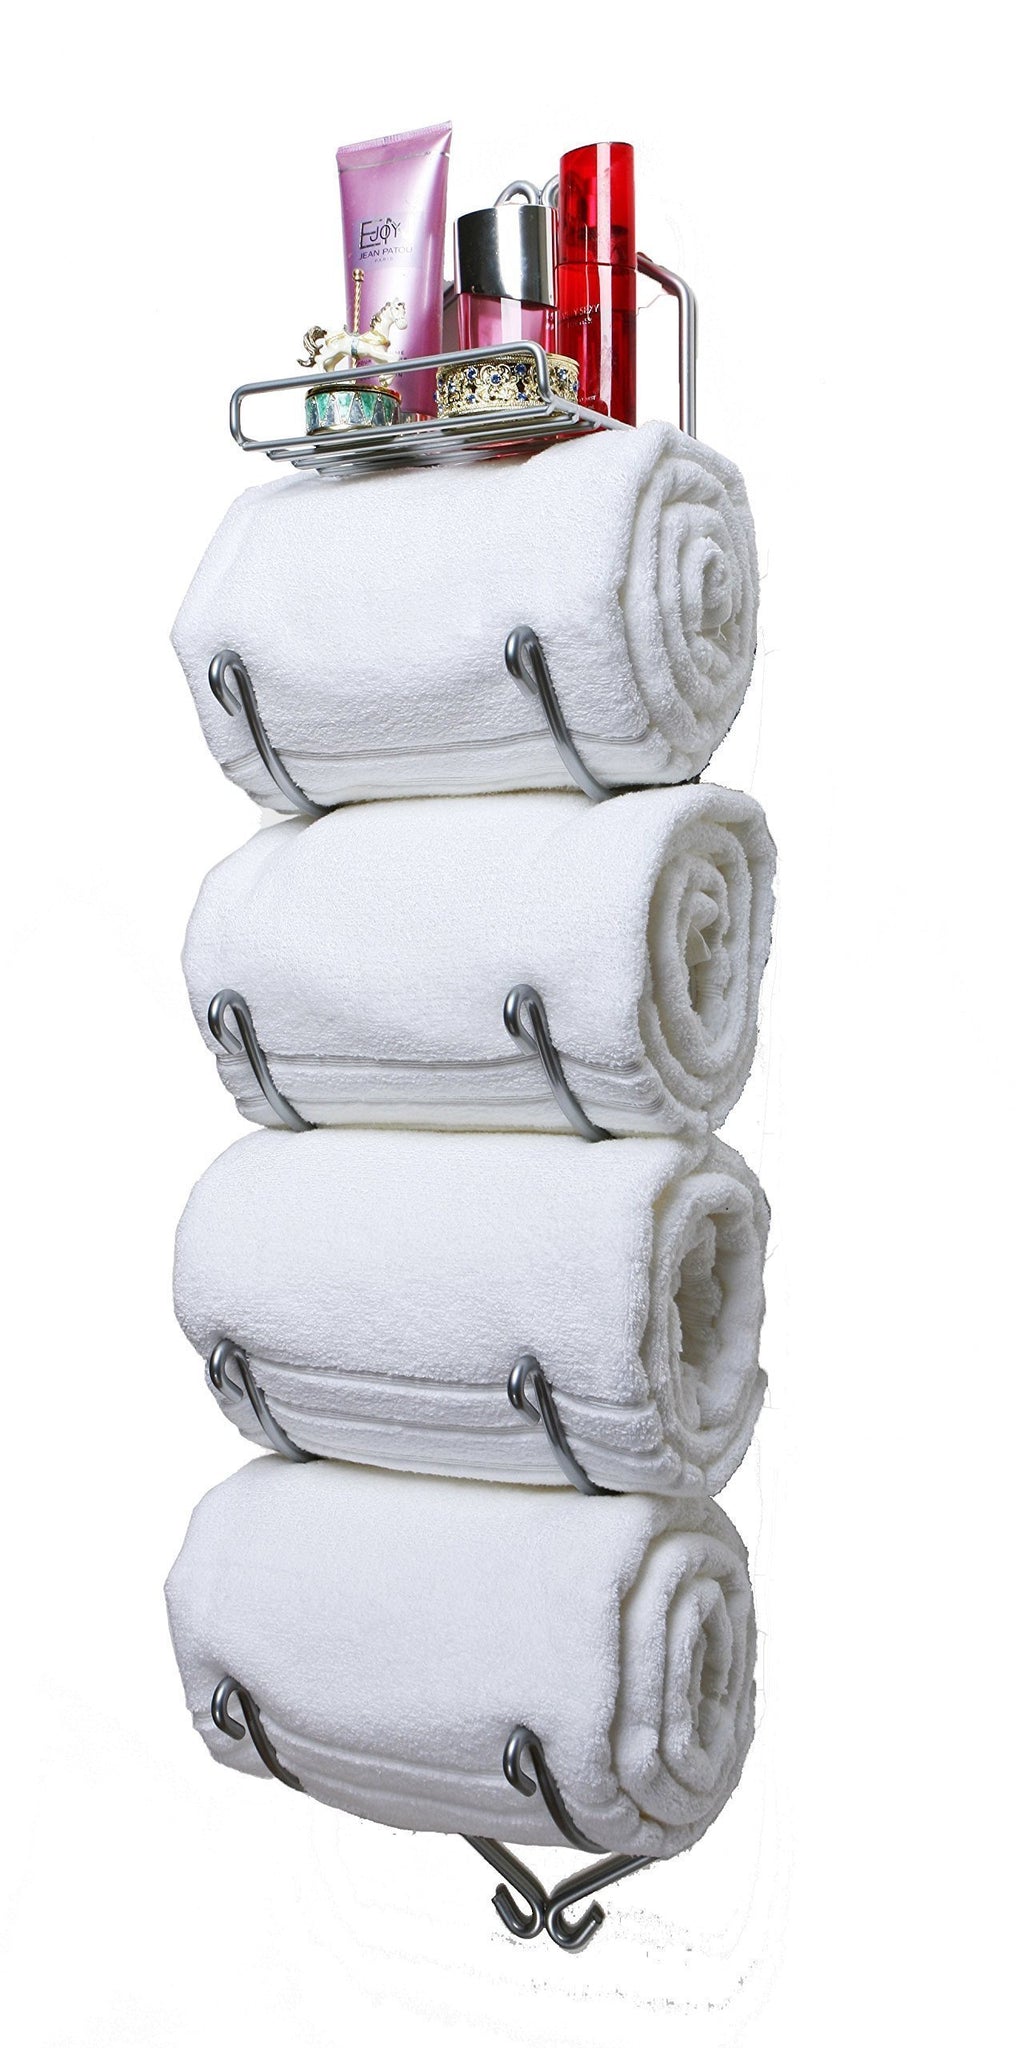 Sparkling Collectibles 38" Wall Mounted 4 Arm + Shelf Chrome Towel Rack ~ Towel Holder, Bathroom Towel, Bathroom Storage (Chrome, 4 Arm + Shelf) Made in the U.S.A